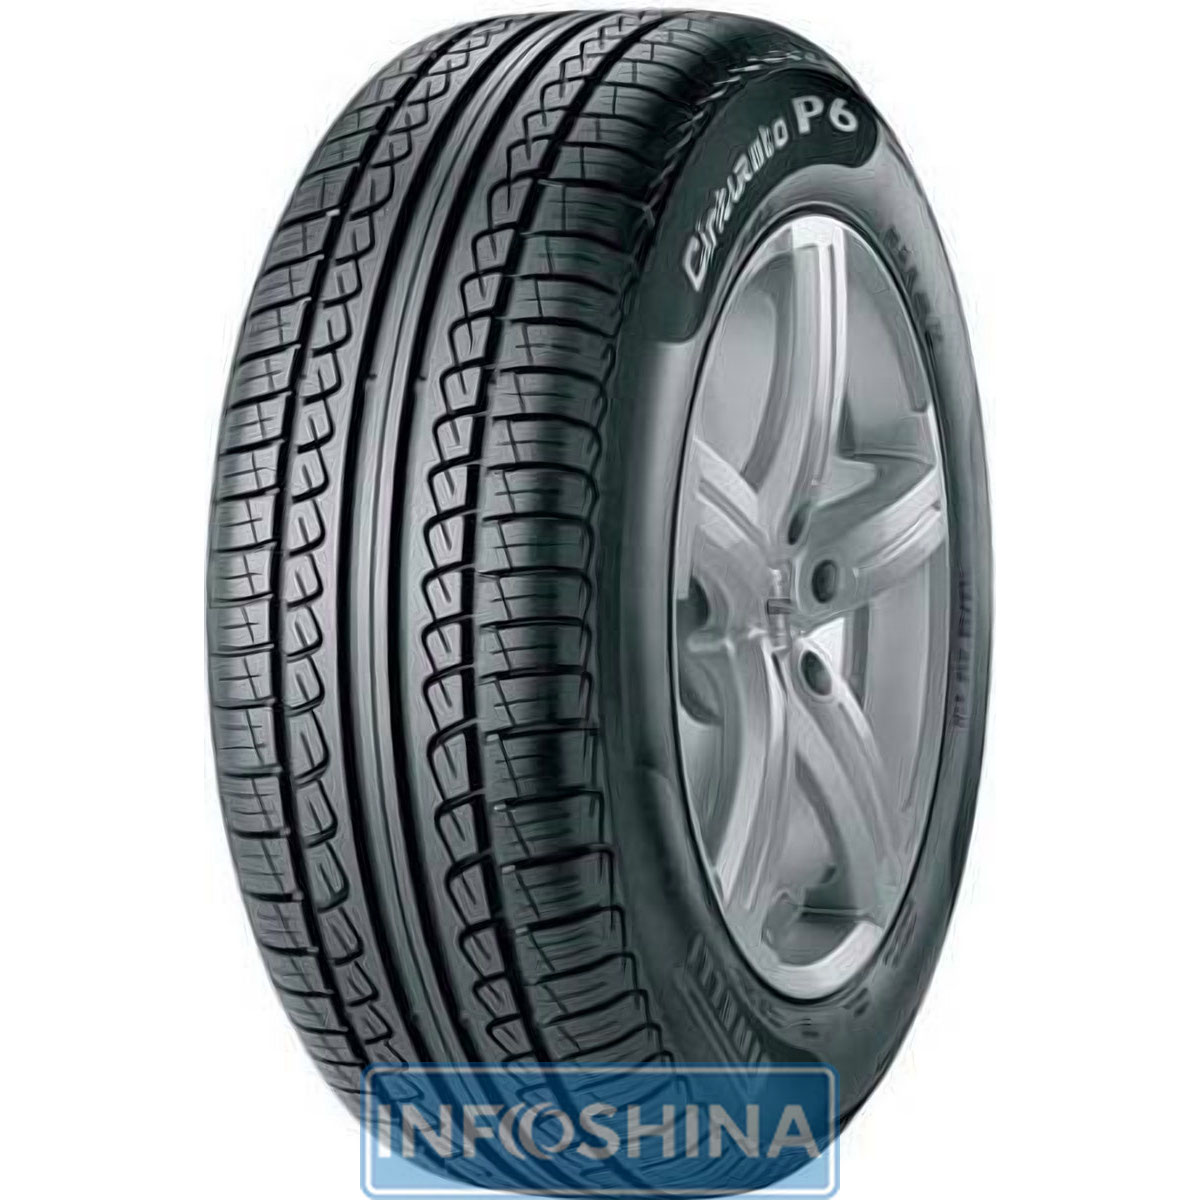 Купить шины Pirelli Cinturato P6 195/65 R15 95H